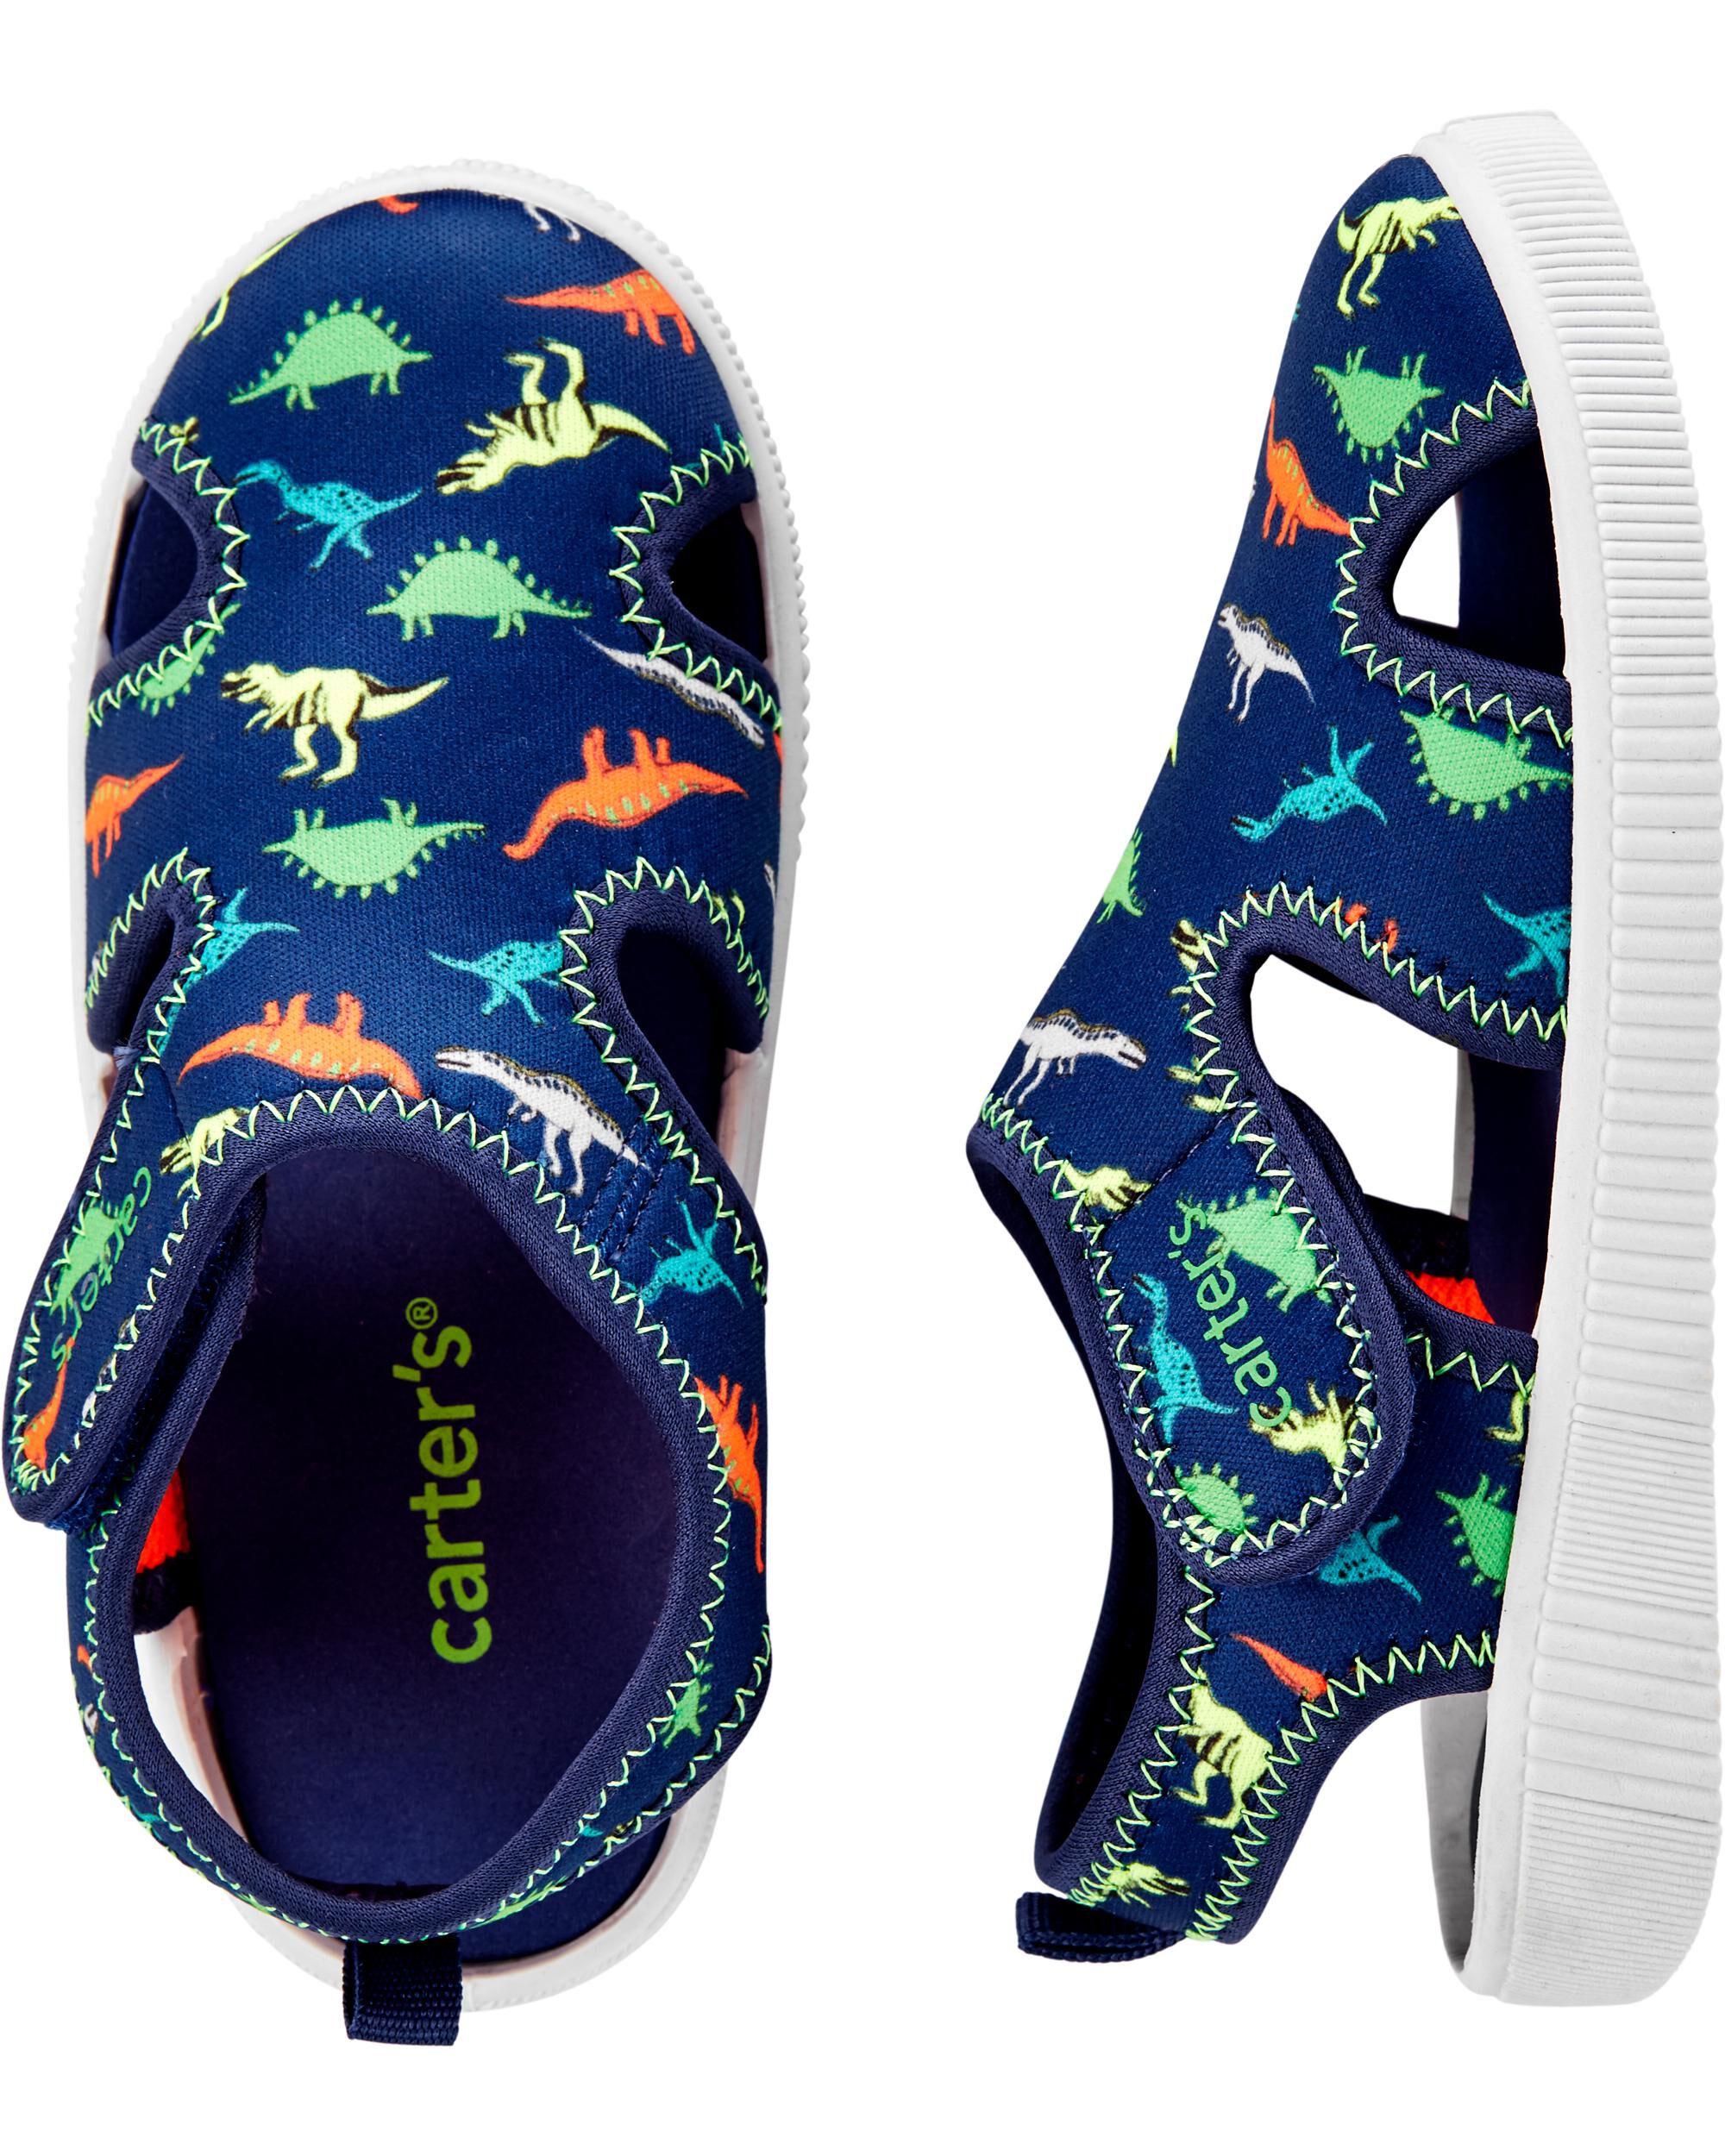 carters dinosaur shoes